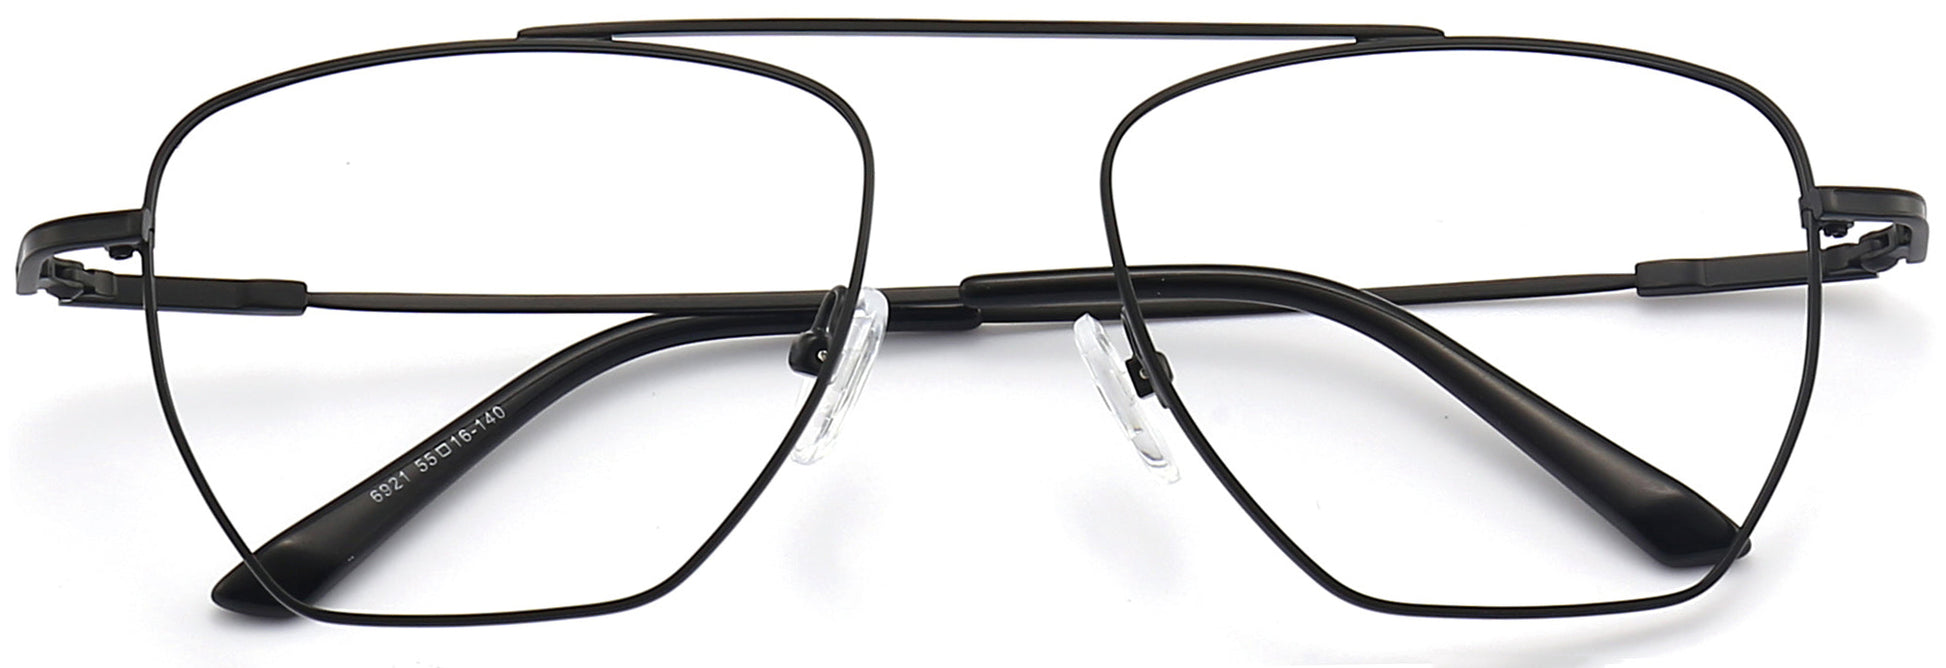 Alijah Geometric Black Eyeglasses from ANRRI, closed view